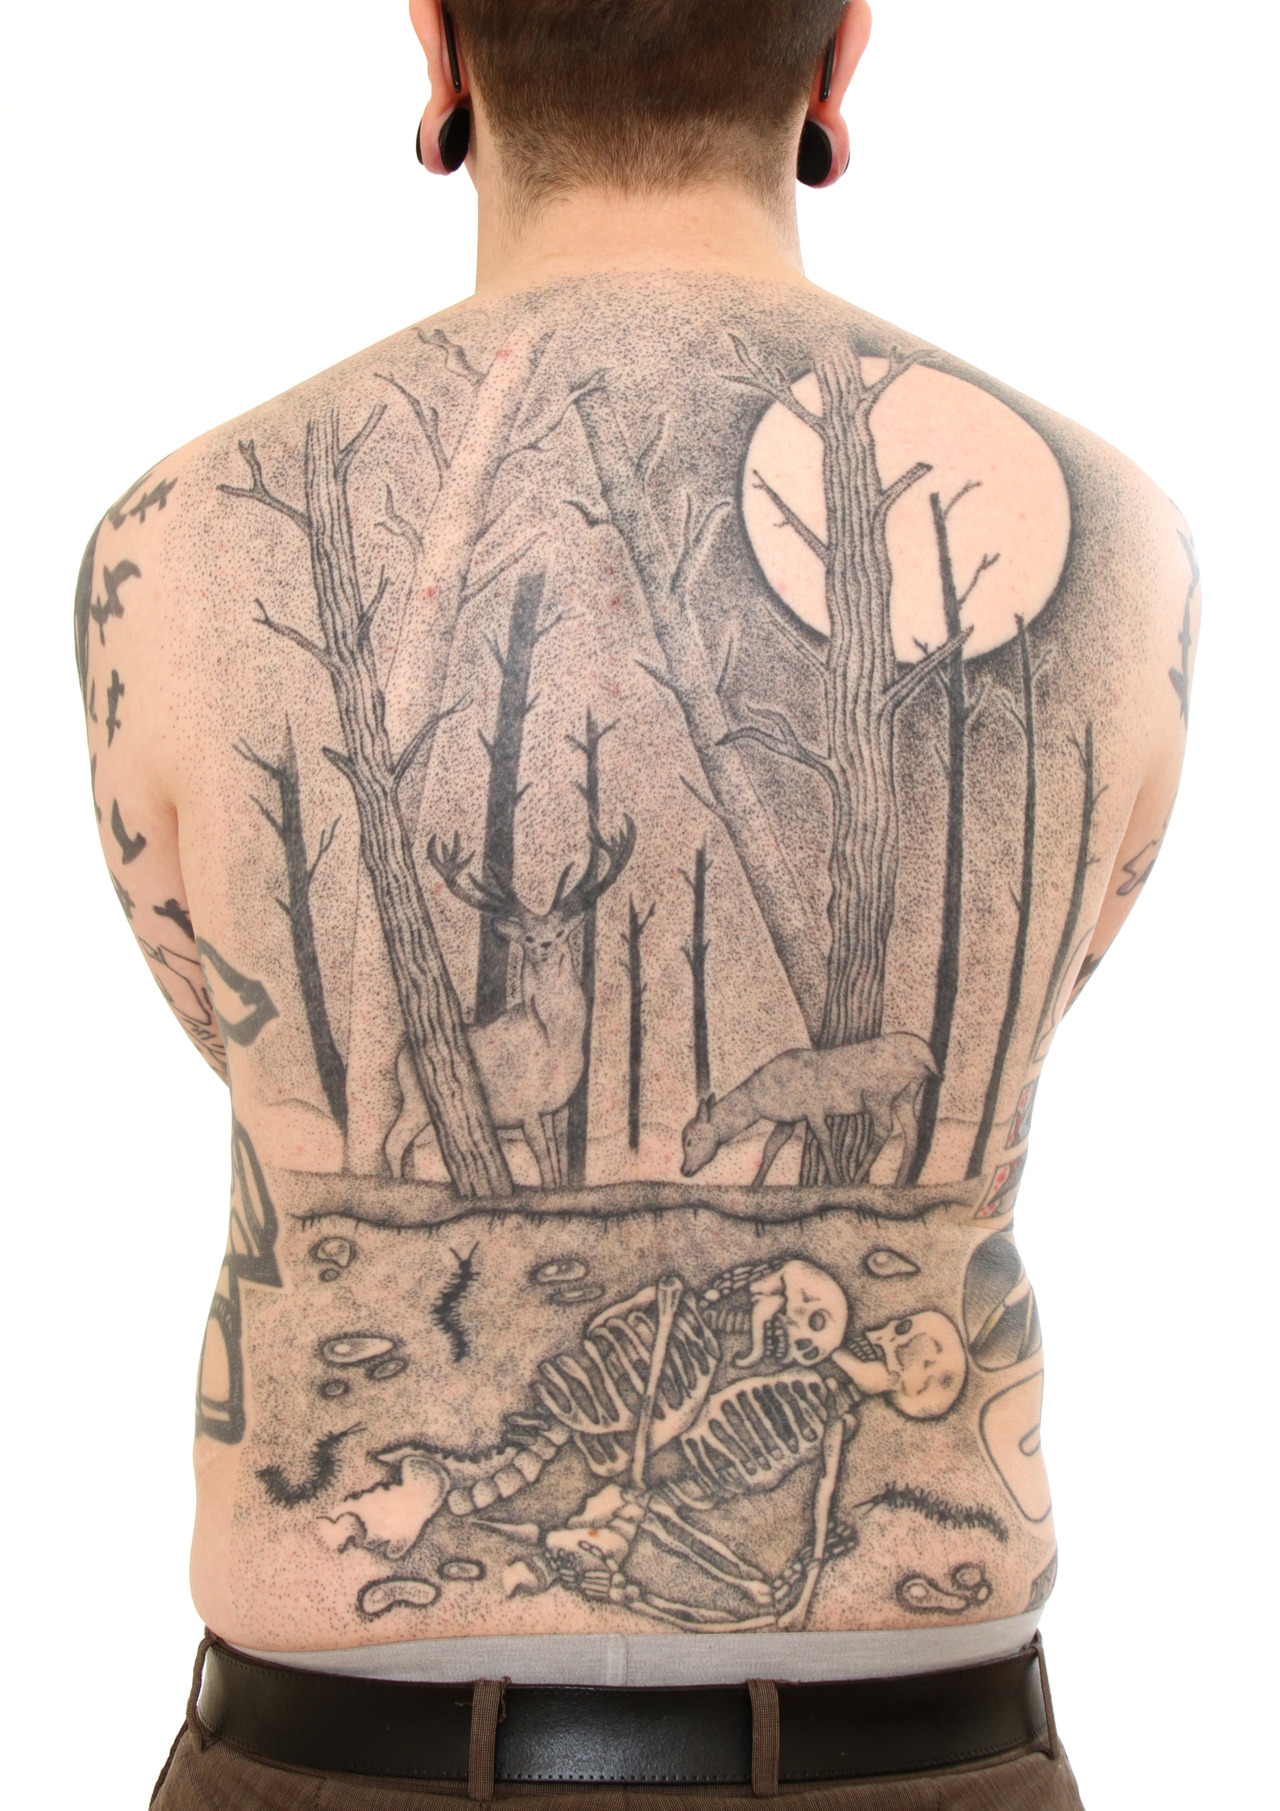 Woods Best tattoo design ideas